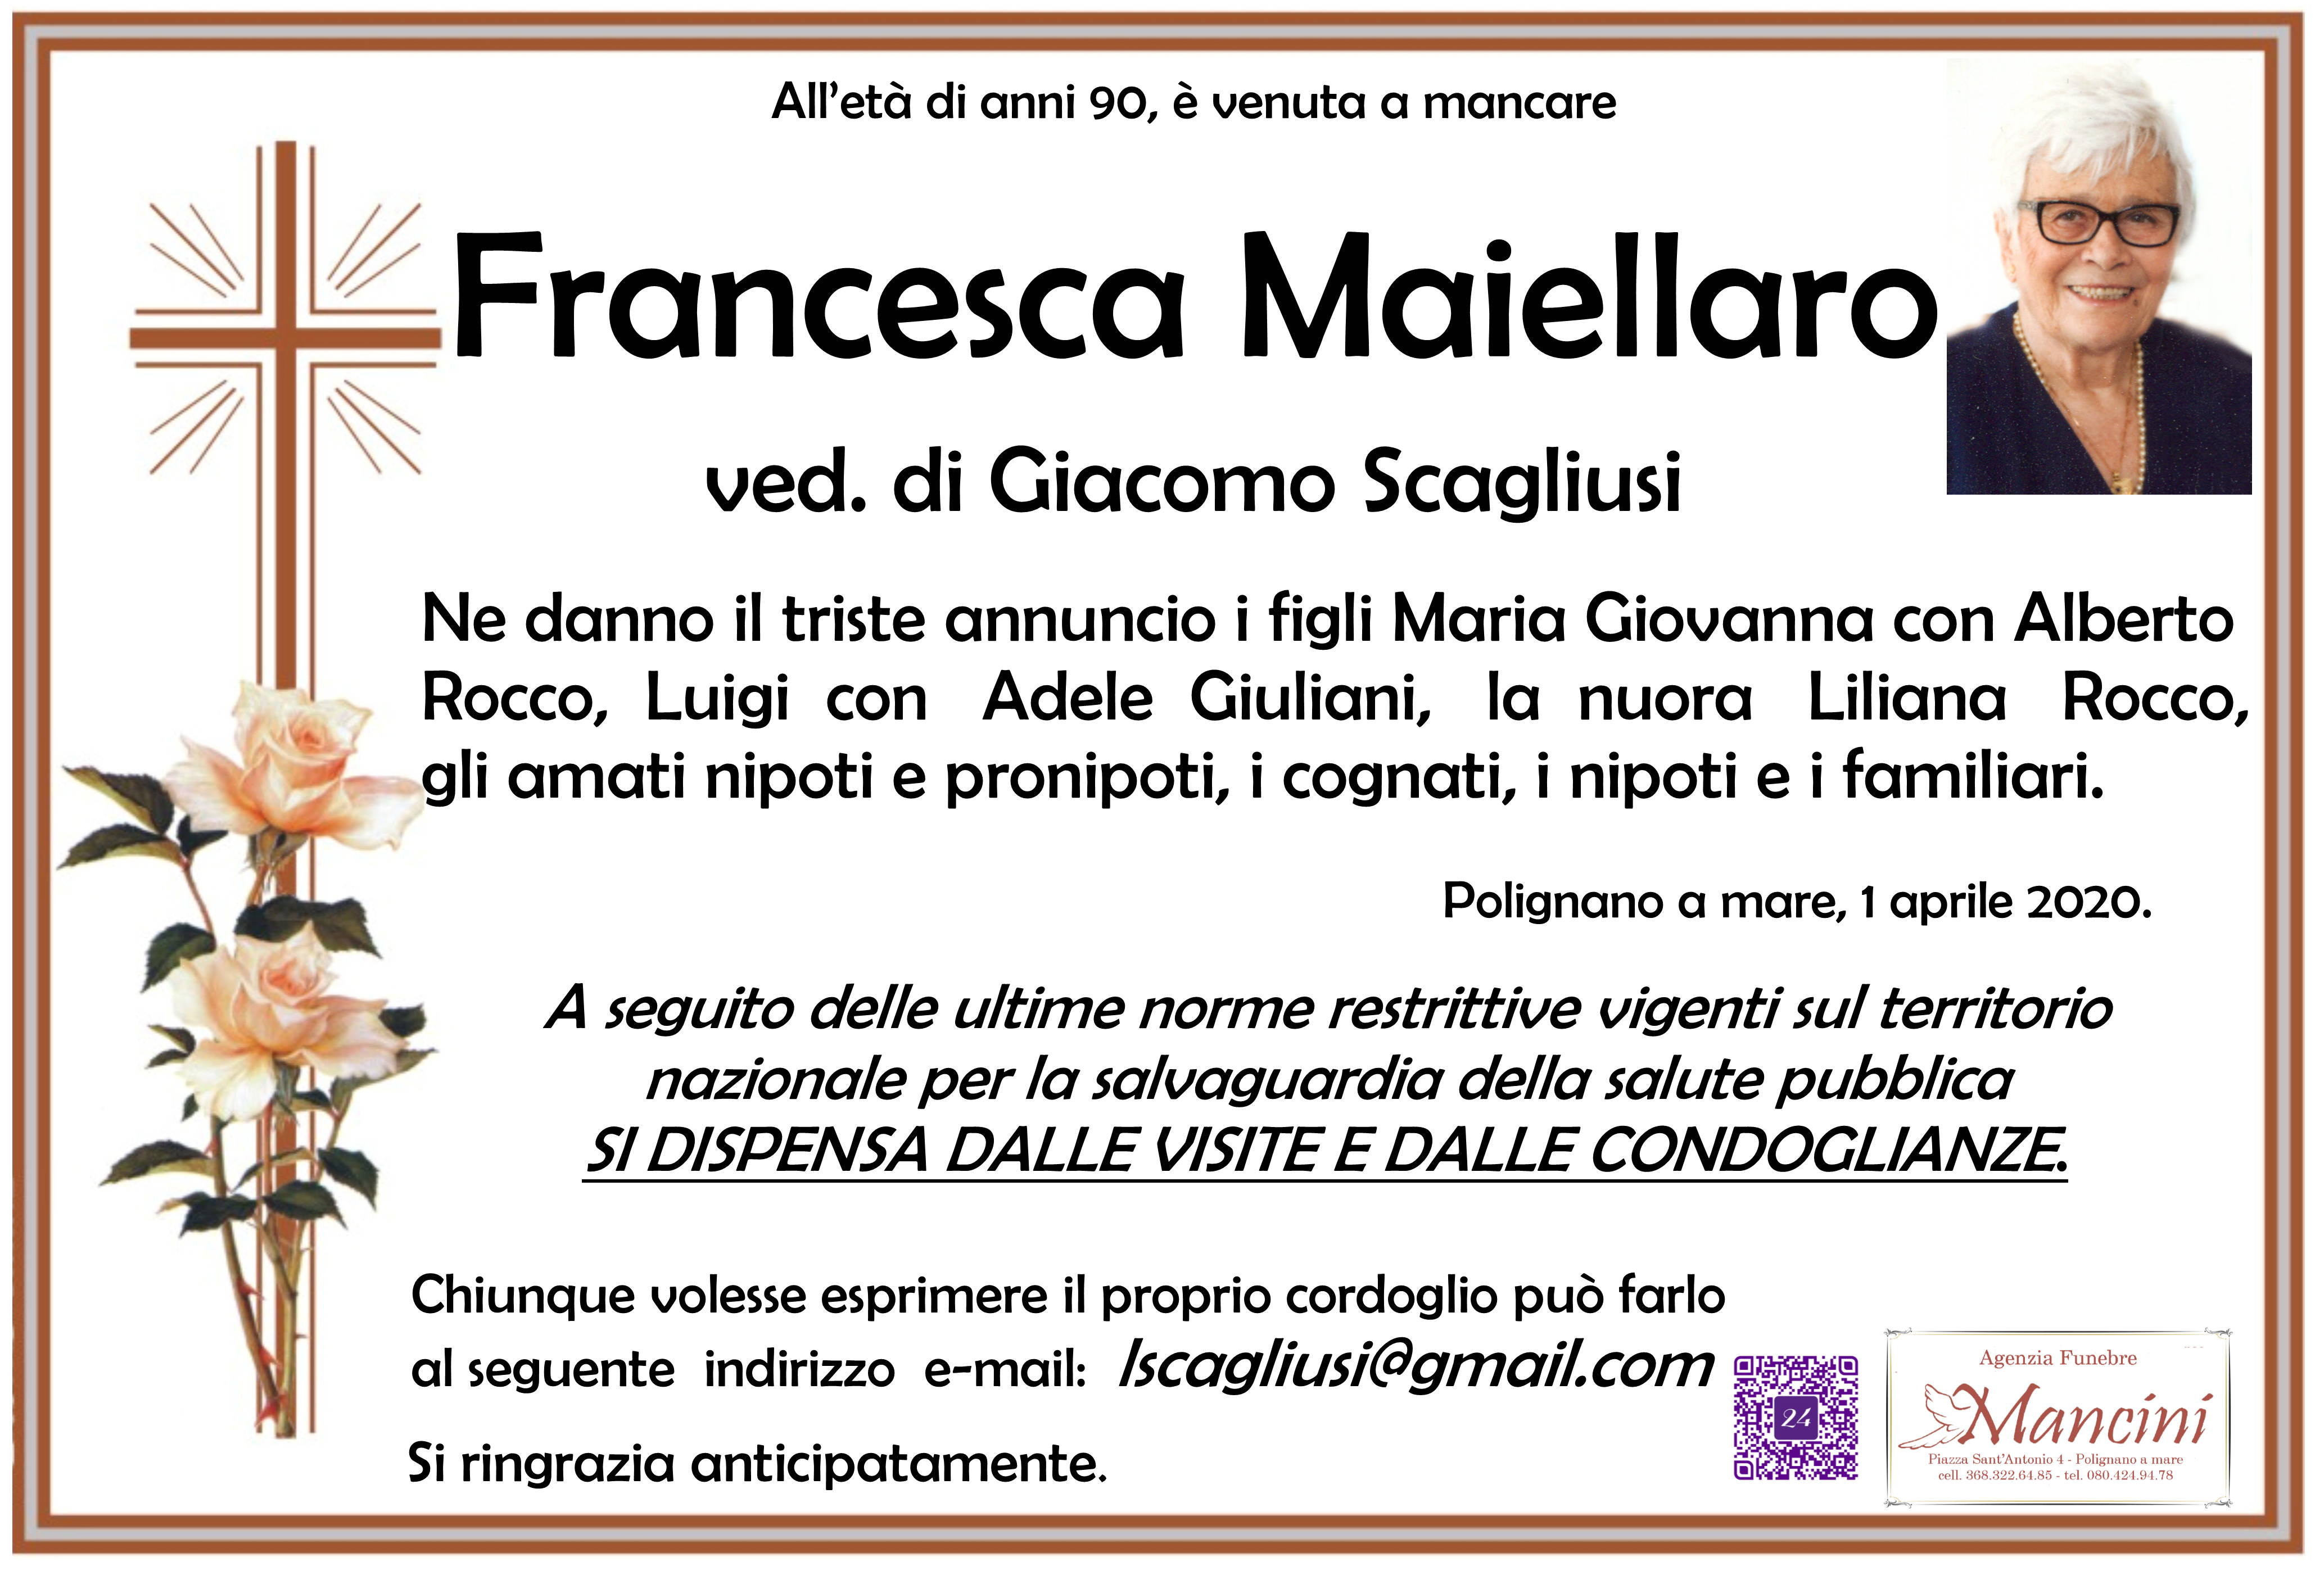 Francesca Maiellaro